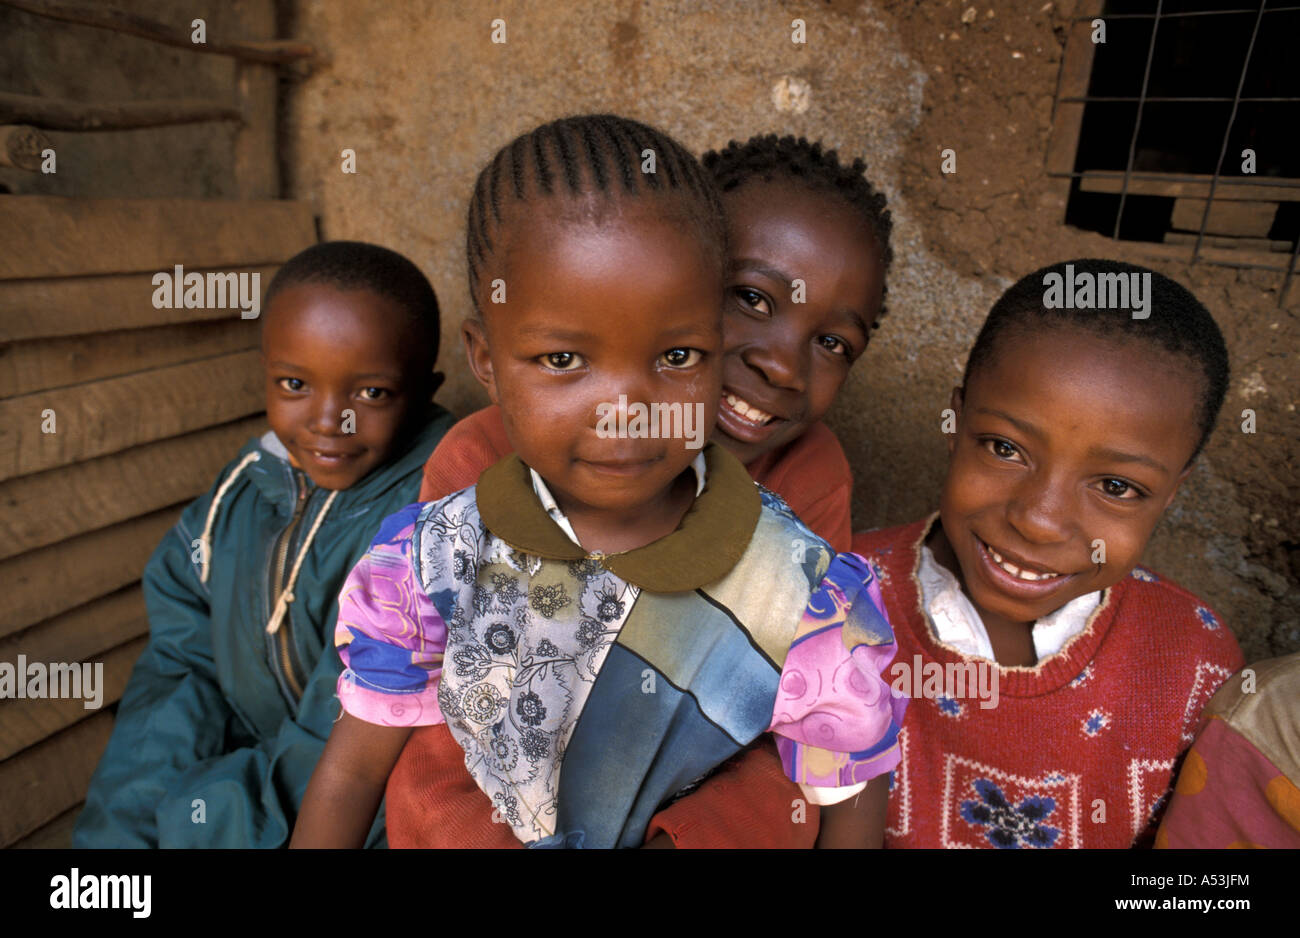 Painet ha0923 6250 kenya children kibera slum nairobi country developing nation less economically developed culture emerging Stock Photo